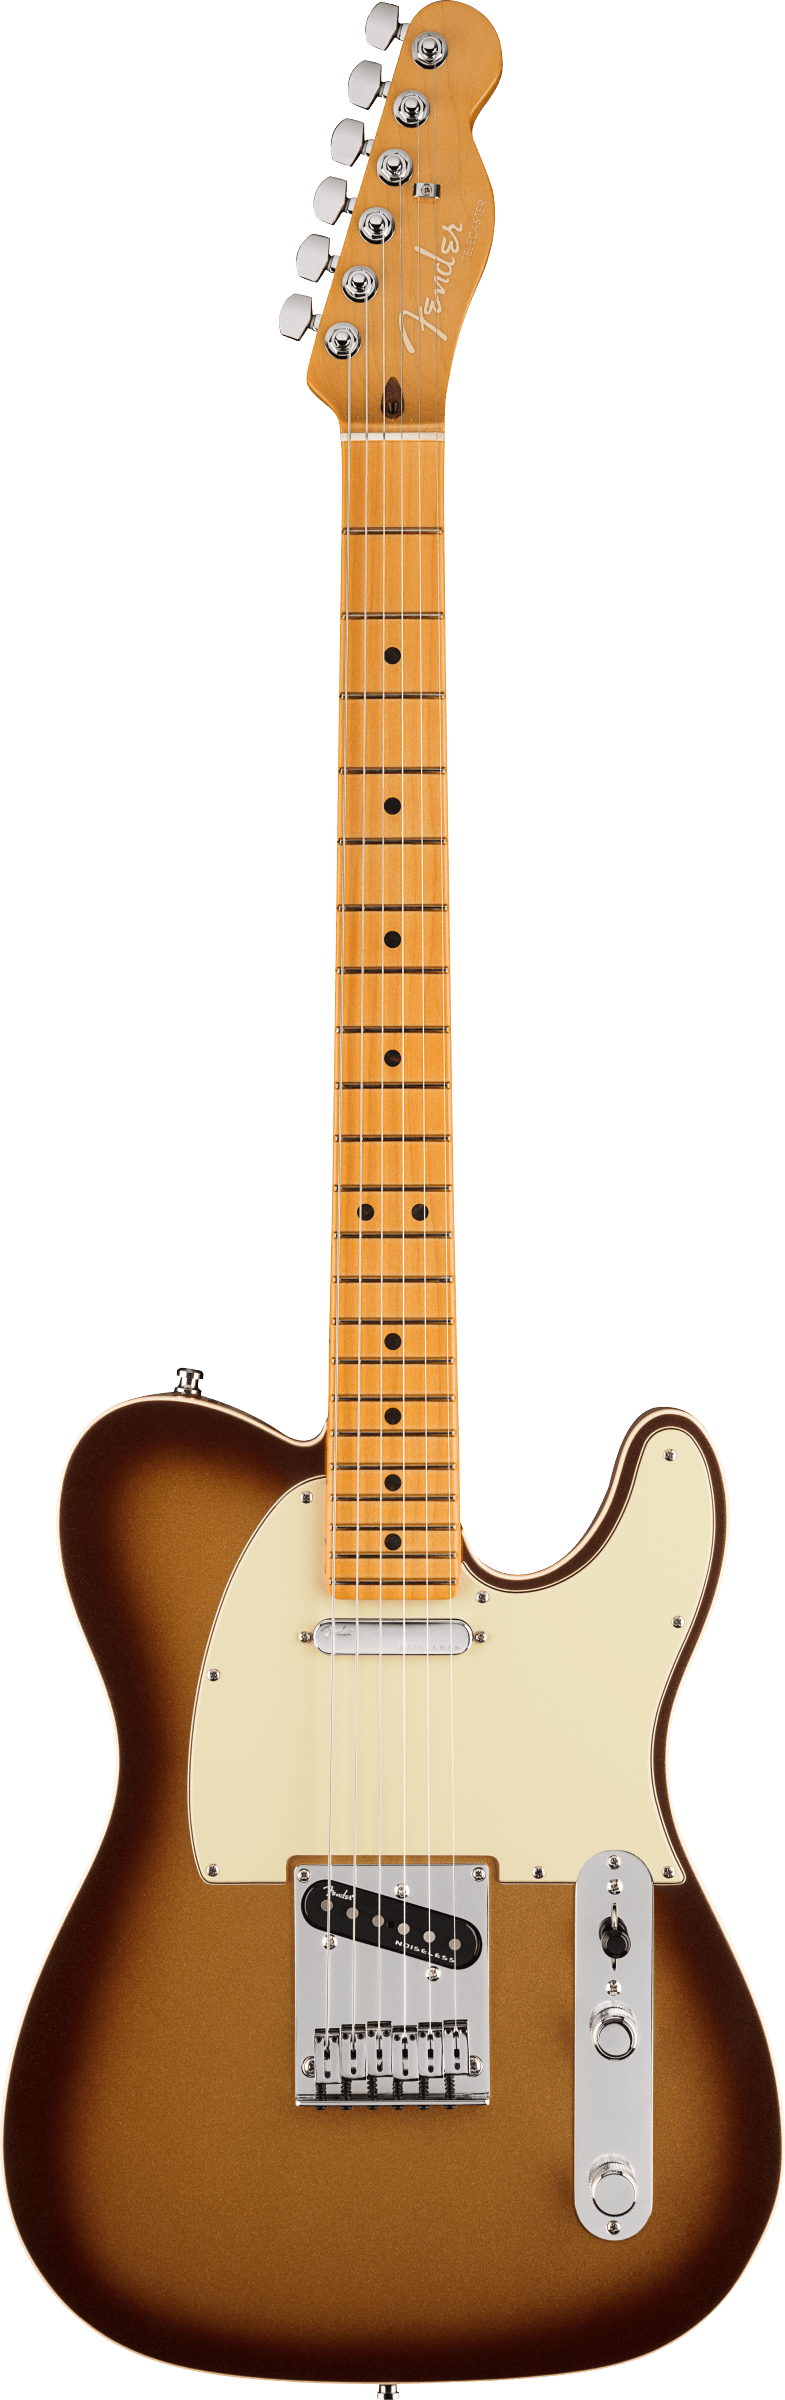 Fender Telecaster MP electric guitar in Mocha Burst color Tone Shop Guitars Dallas TX